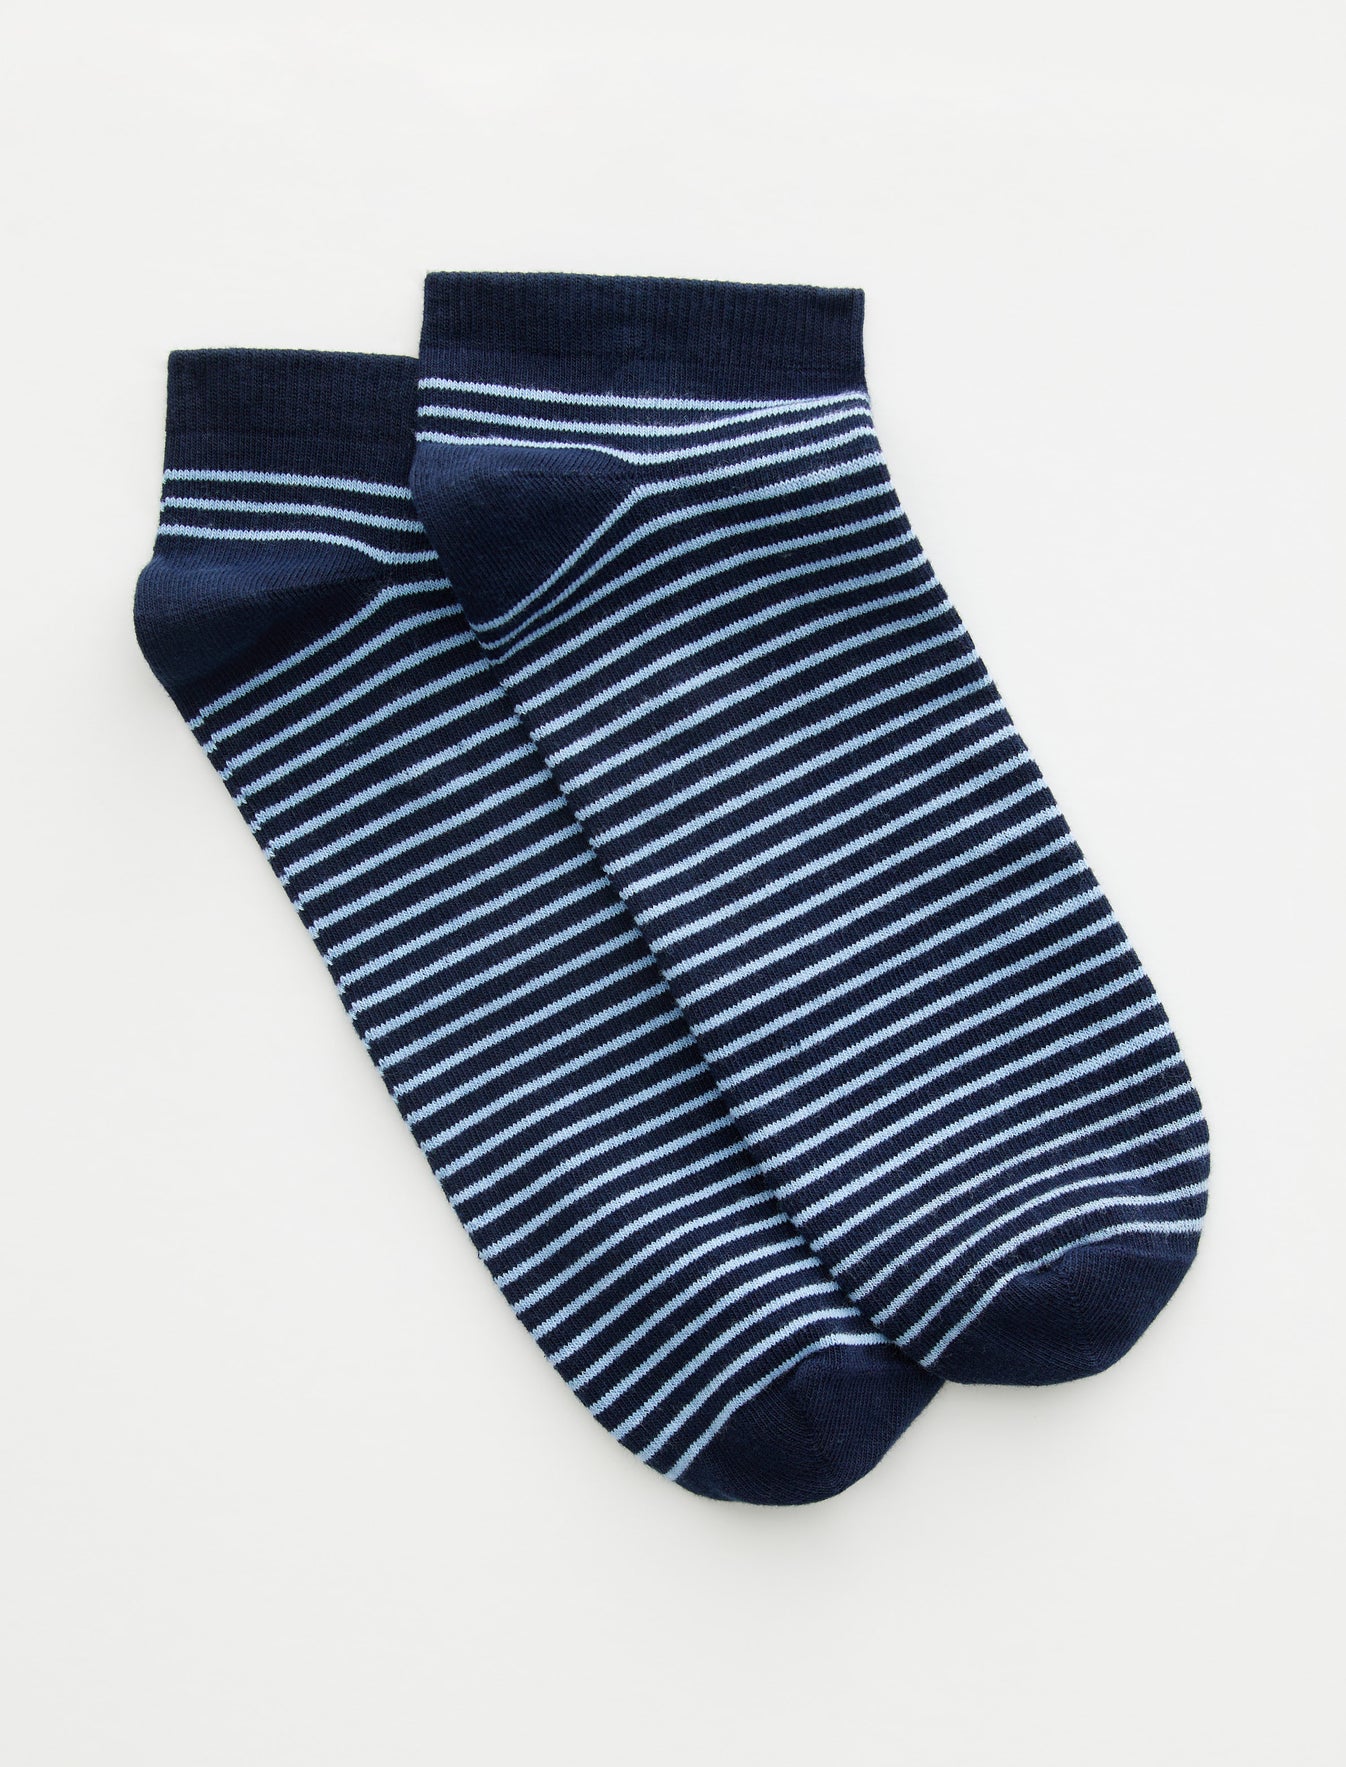 Ankle Sock 1 Stripe Tropic Air Multi Unisex Accsry Photo 1